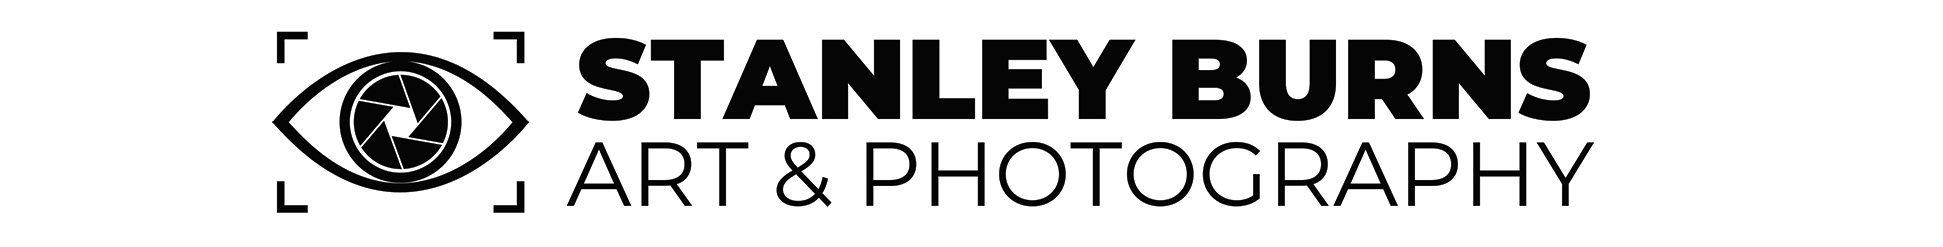 STANLEY BURNS PHOTOGRAPHY